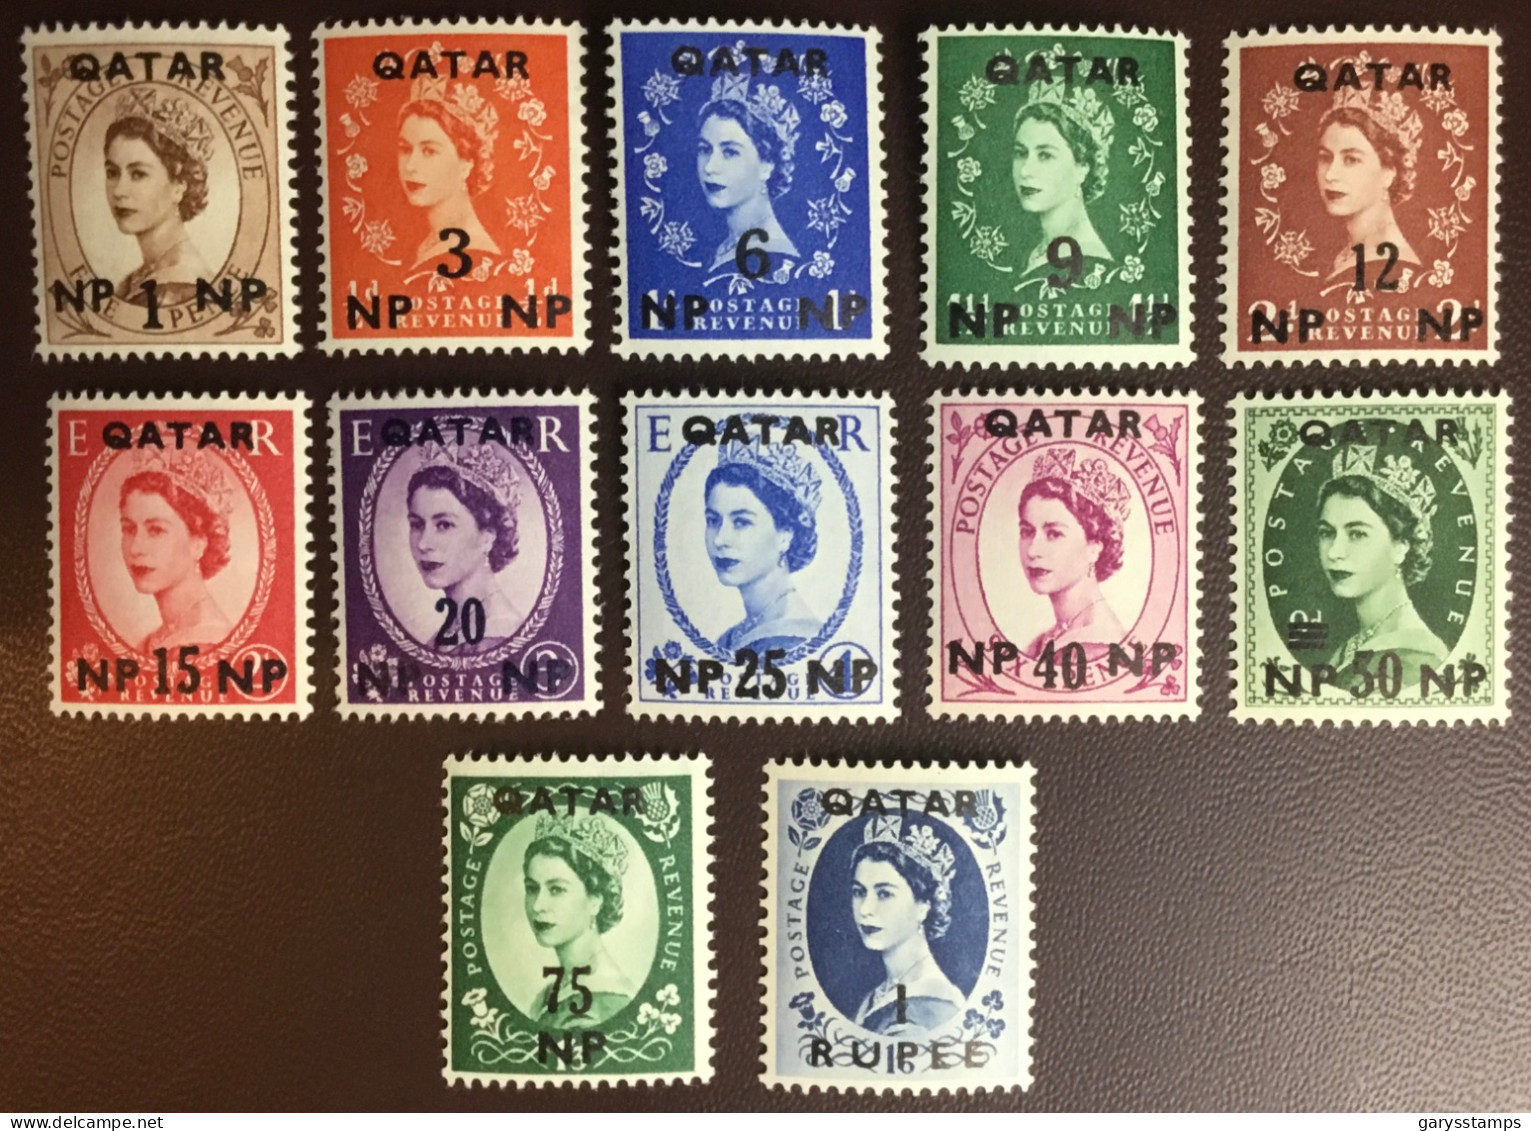 Qatar 1957 Definitives Set MNH - Qatar